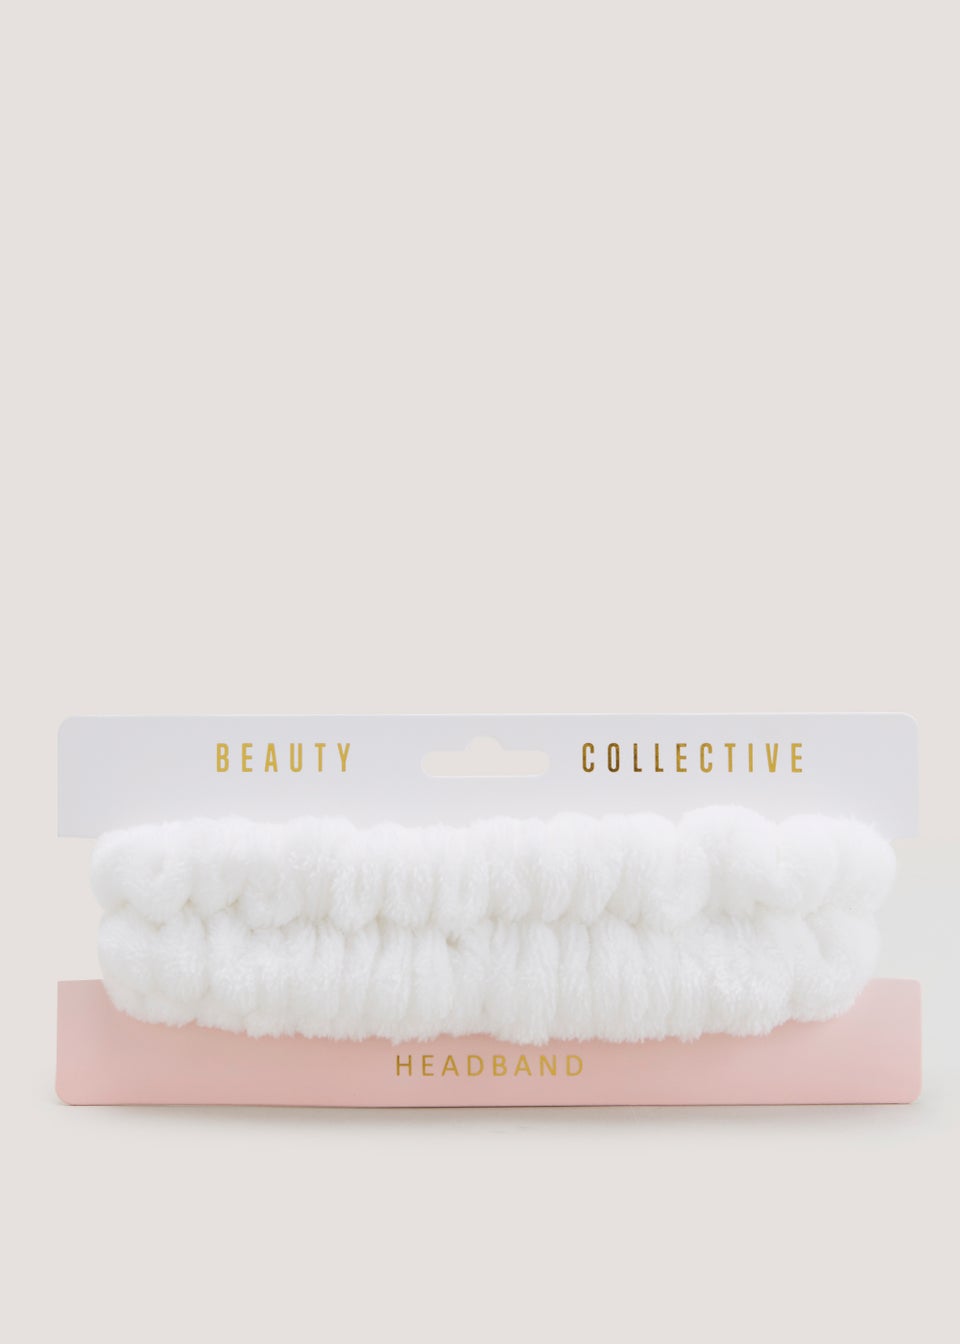 Beauty Collective White Makeup Headband